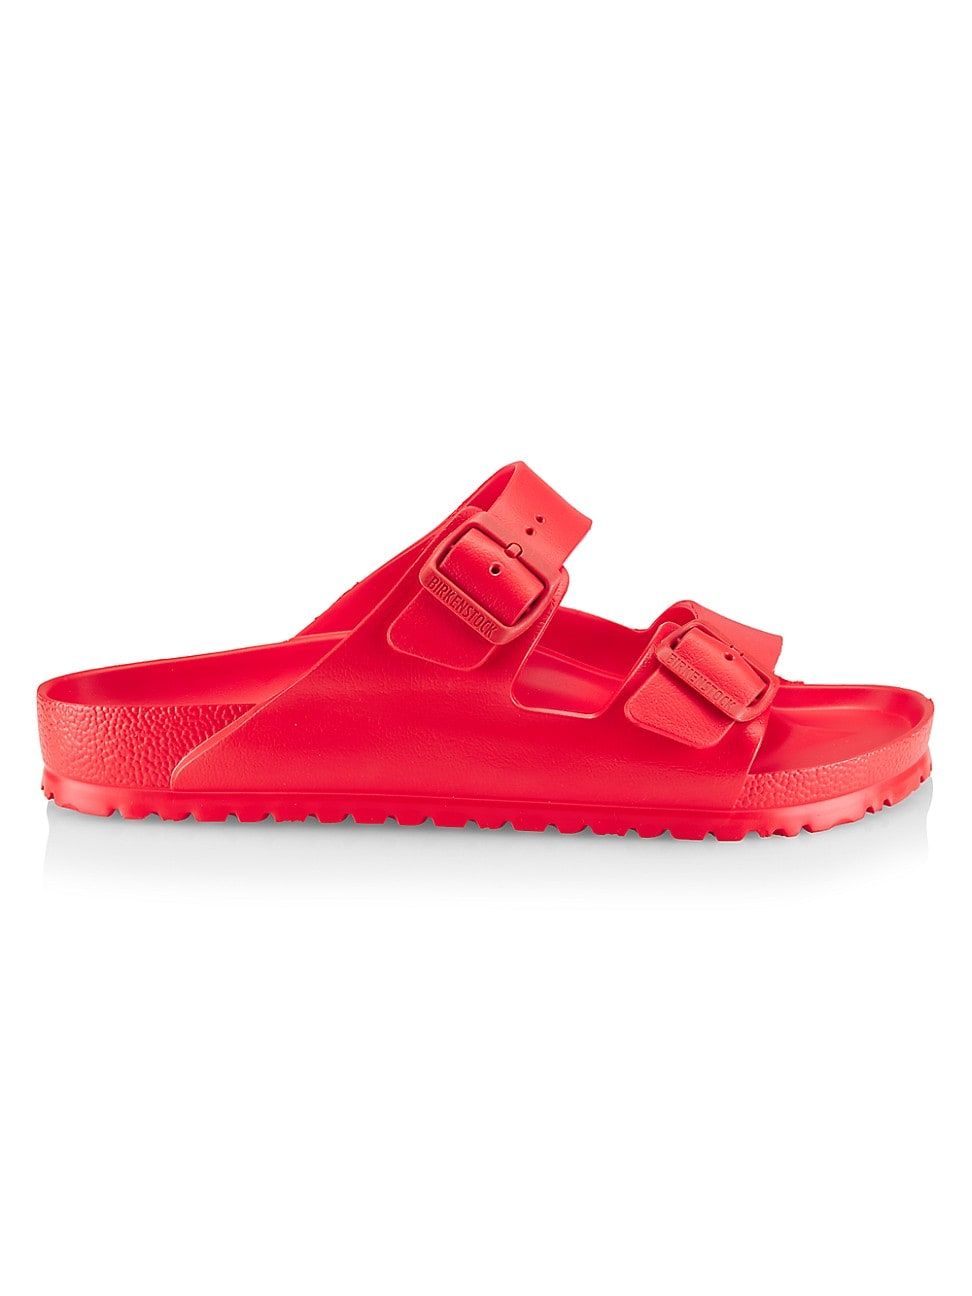 Men's Arizona Rubber Sandals - Active Red - Size 12 | Saks Fifth Avenue